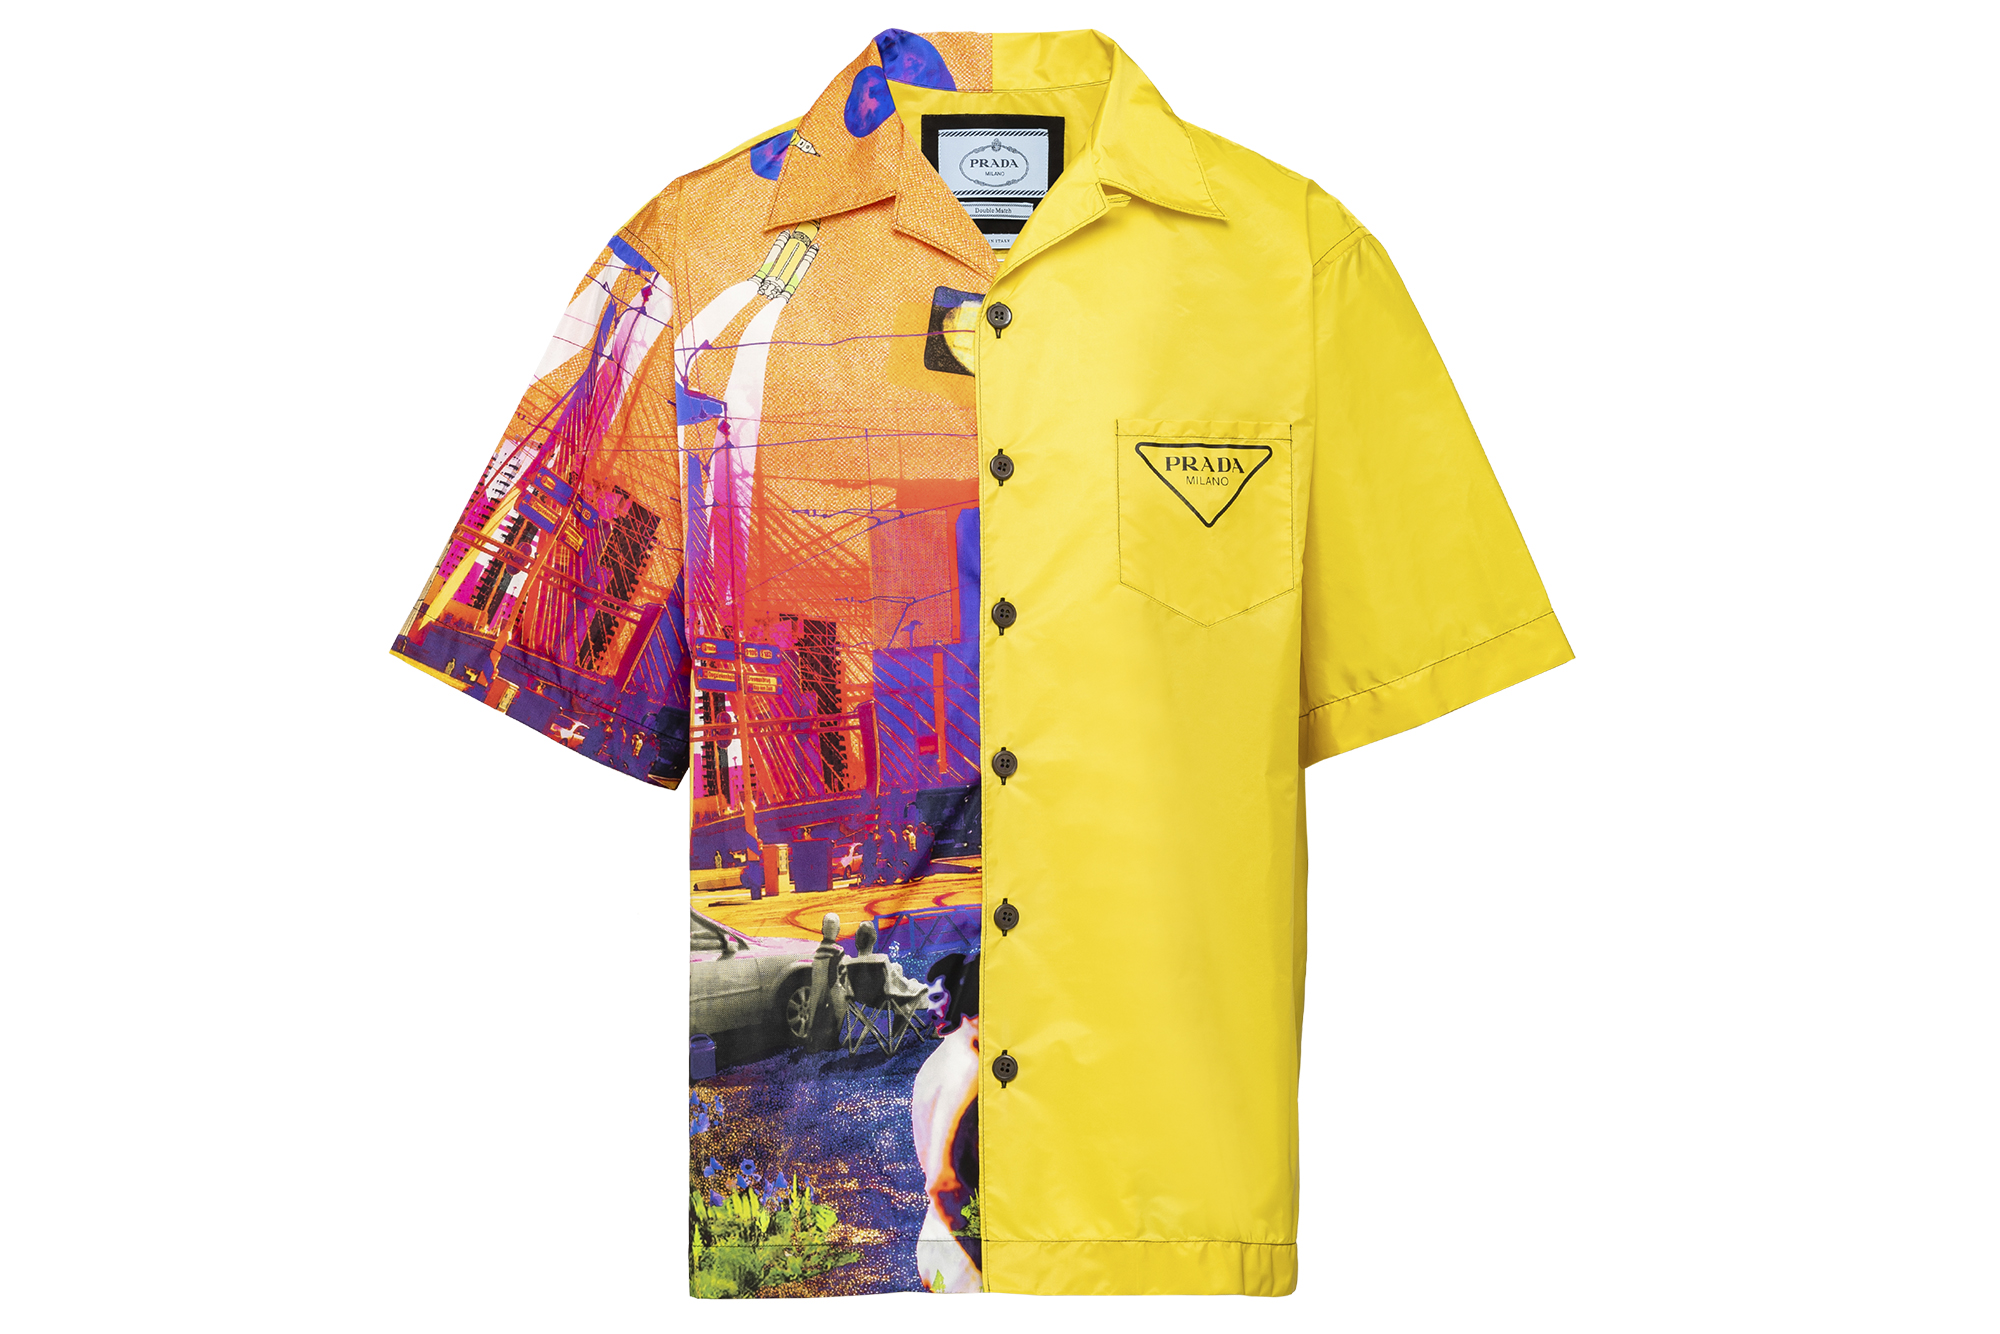 Prada Double Match Shirt mixed media yellow and graphic